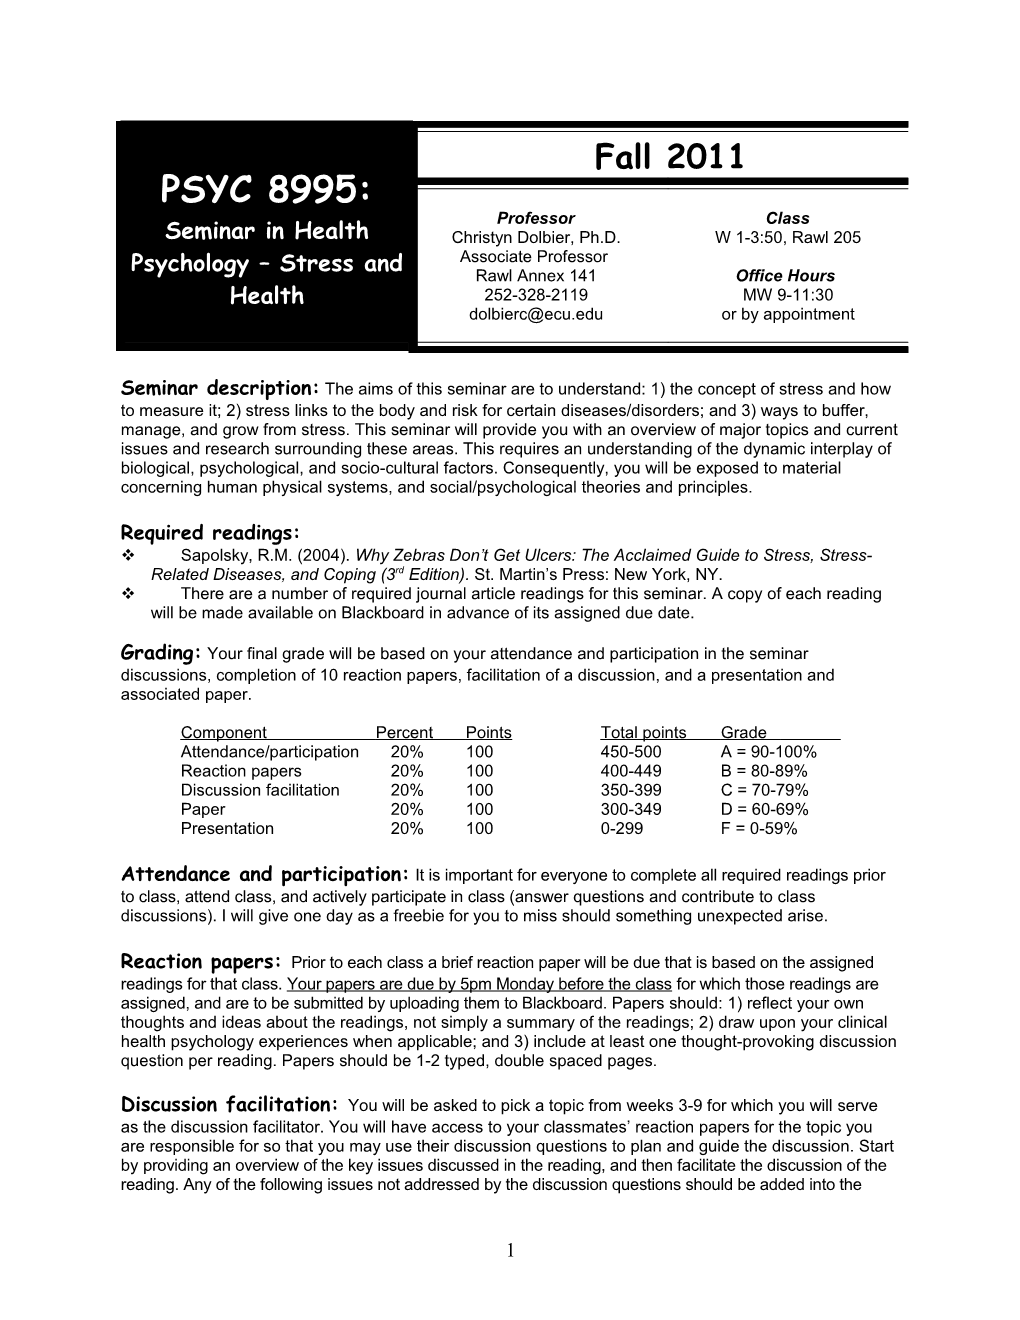 PSYC 6501: Problems in Psychology: Health Psychology